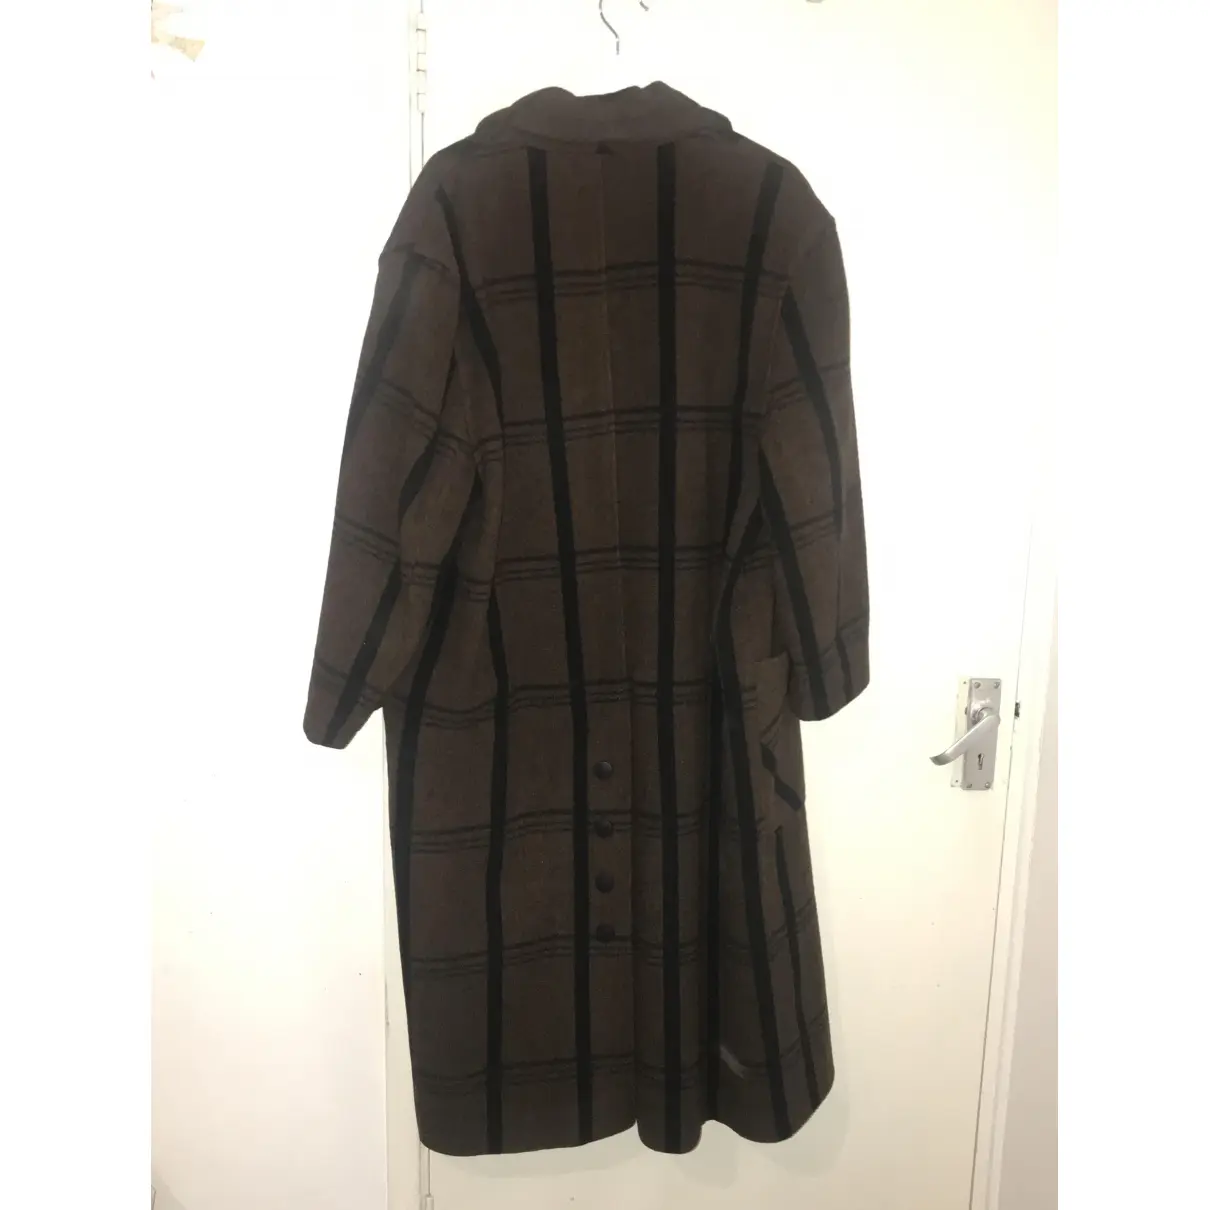 Buy Mary Quant Wool coat online - Vintage